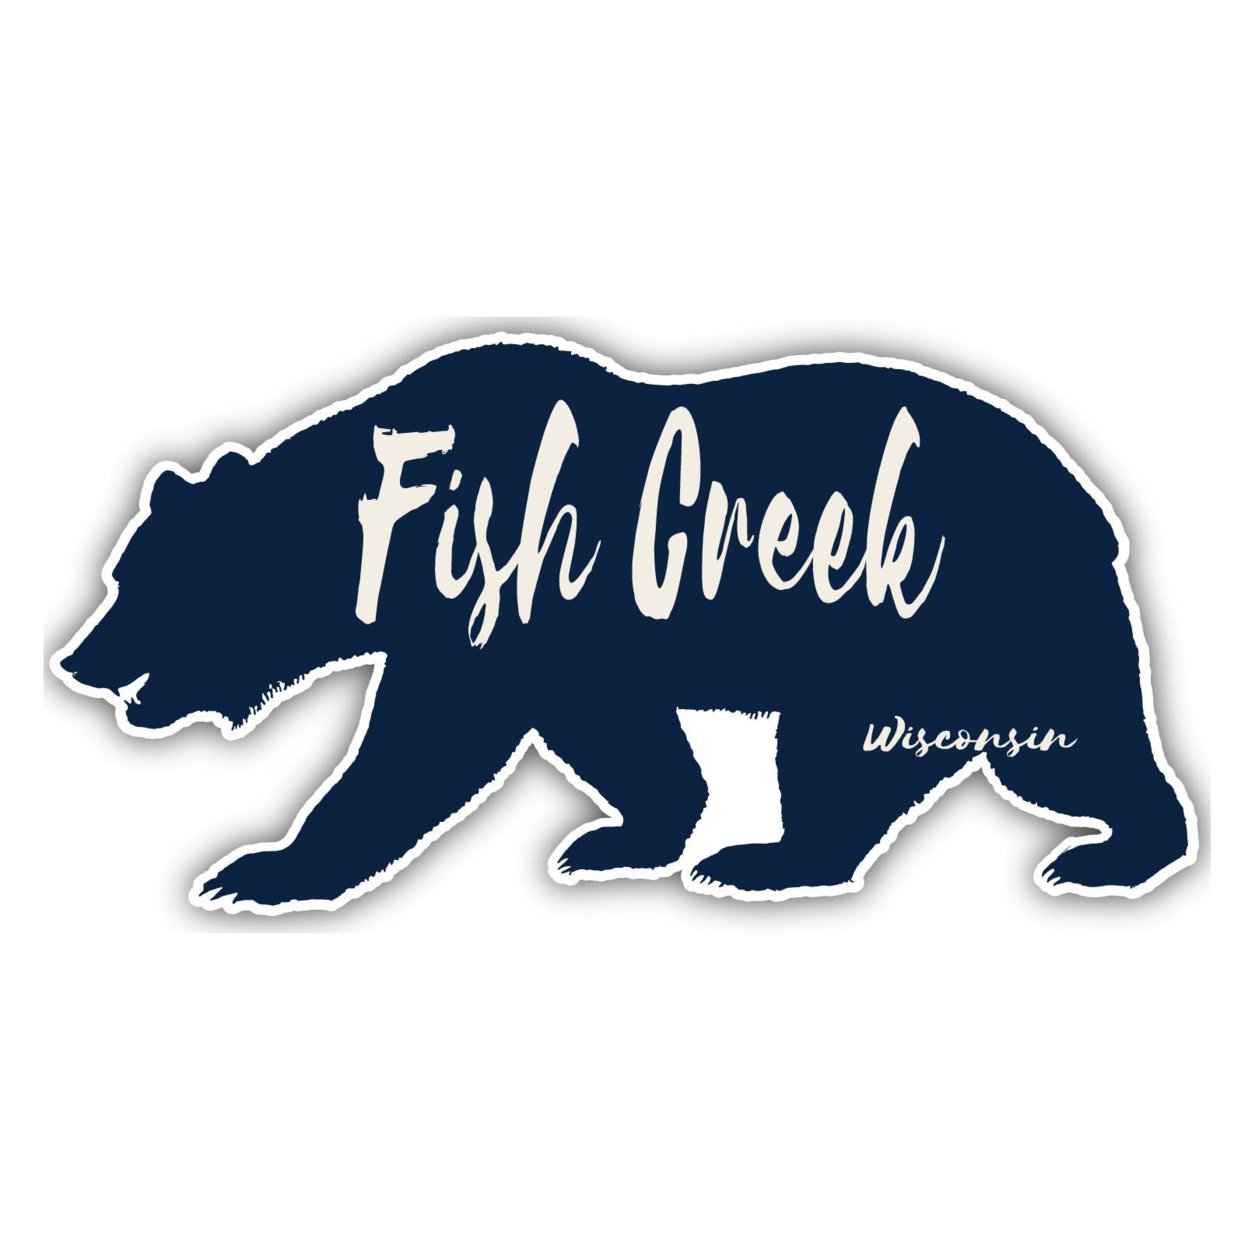 Fish Creek Wisconsin Souvenir Decorative Stickers (Choose Theme And Size) - Single Unit, 10-Inch, Bear